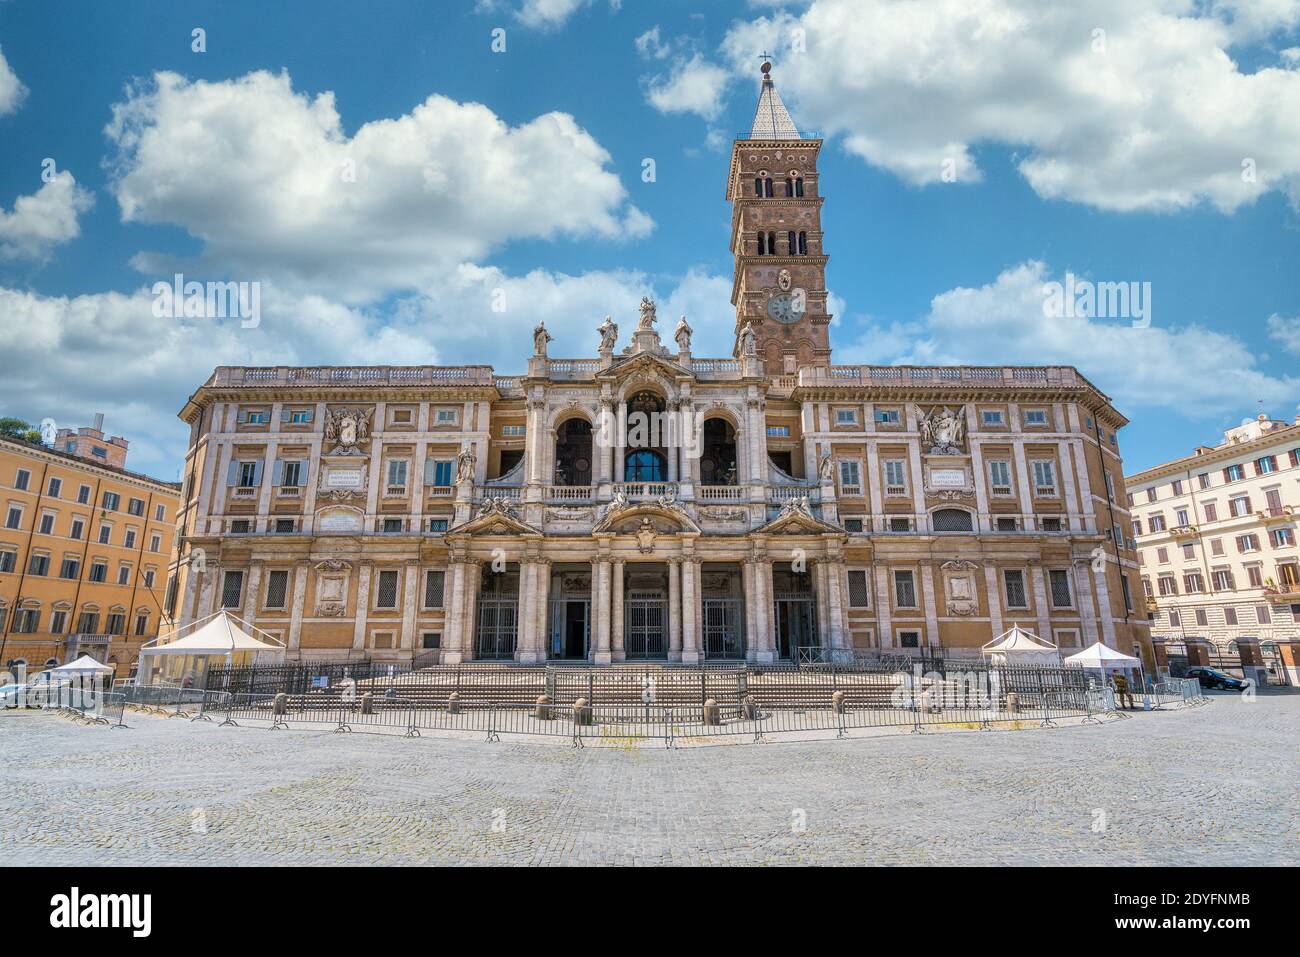 The marvelous facade of the Basilica of Santa Maria Maggiore in Rome, Italy. Stock Photo